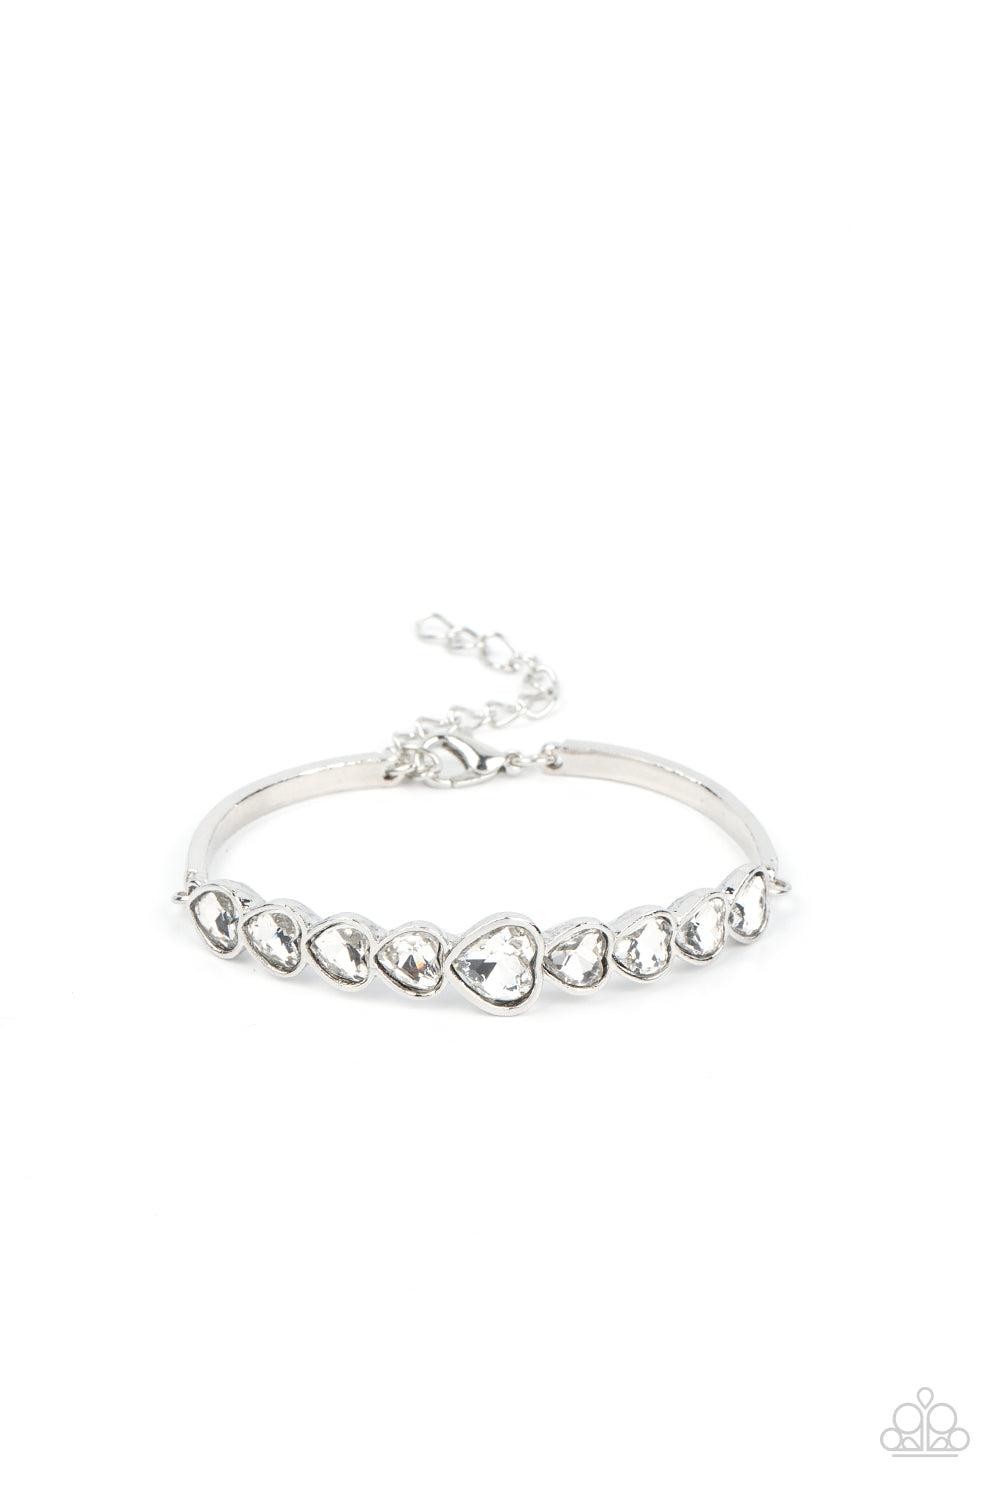 Lusty Luster White Rhinestone Heart Bracelet - Paparazzi Accessories- lightbox - CarasShop.com - $5 Jewelry by Cara Jewels